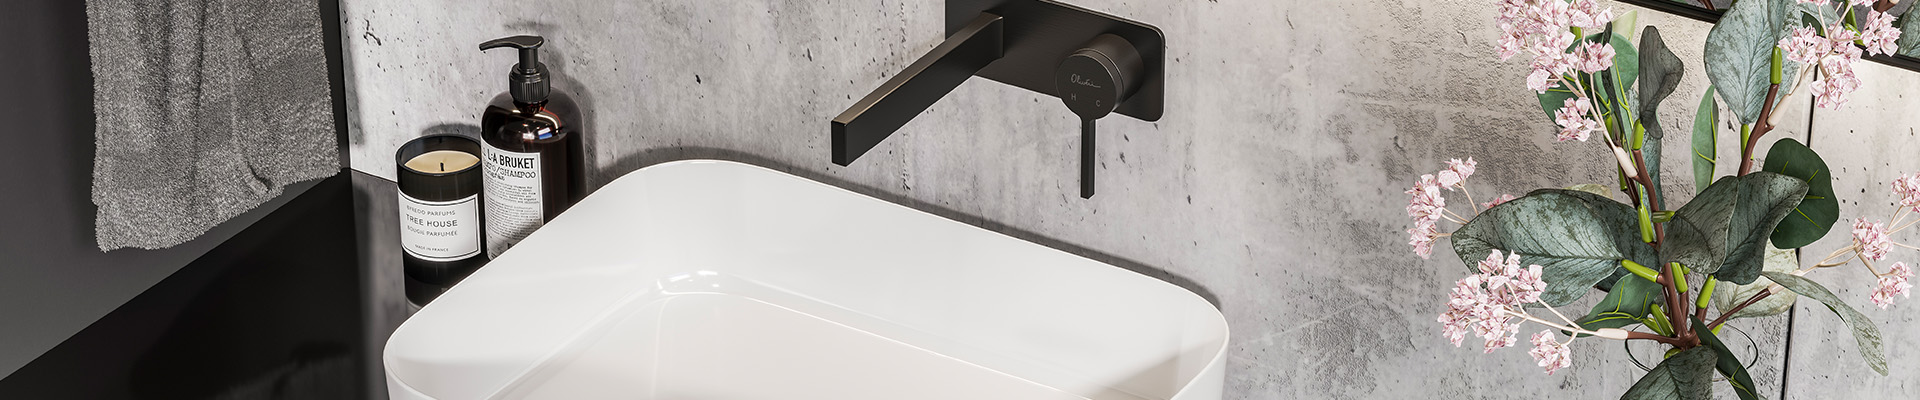 Rectangular white bathroom basin on black counter with black wall mounted basin mixer